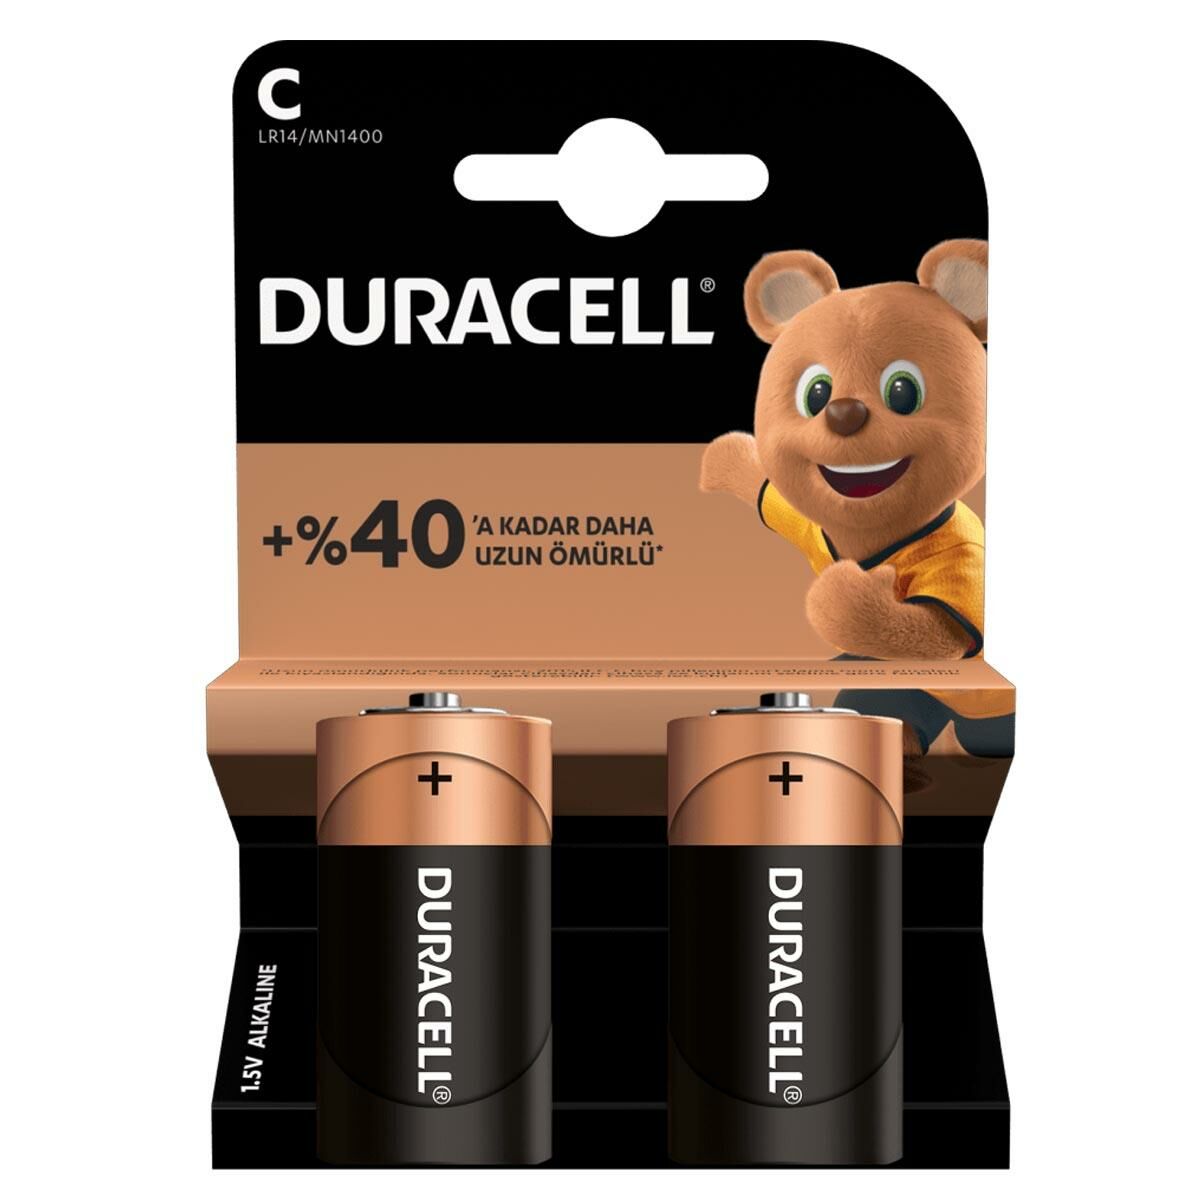 Duracell LR14/MN1400 Alkalin C Orta Boy Pil 2'li Paket